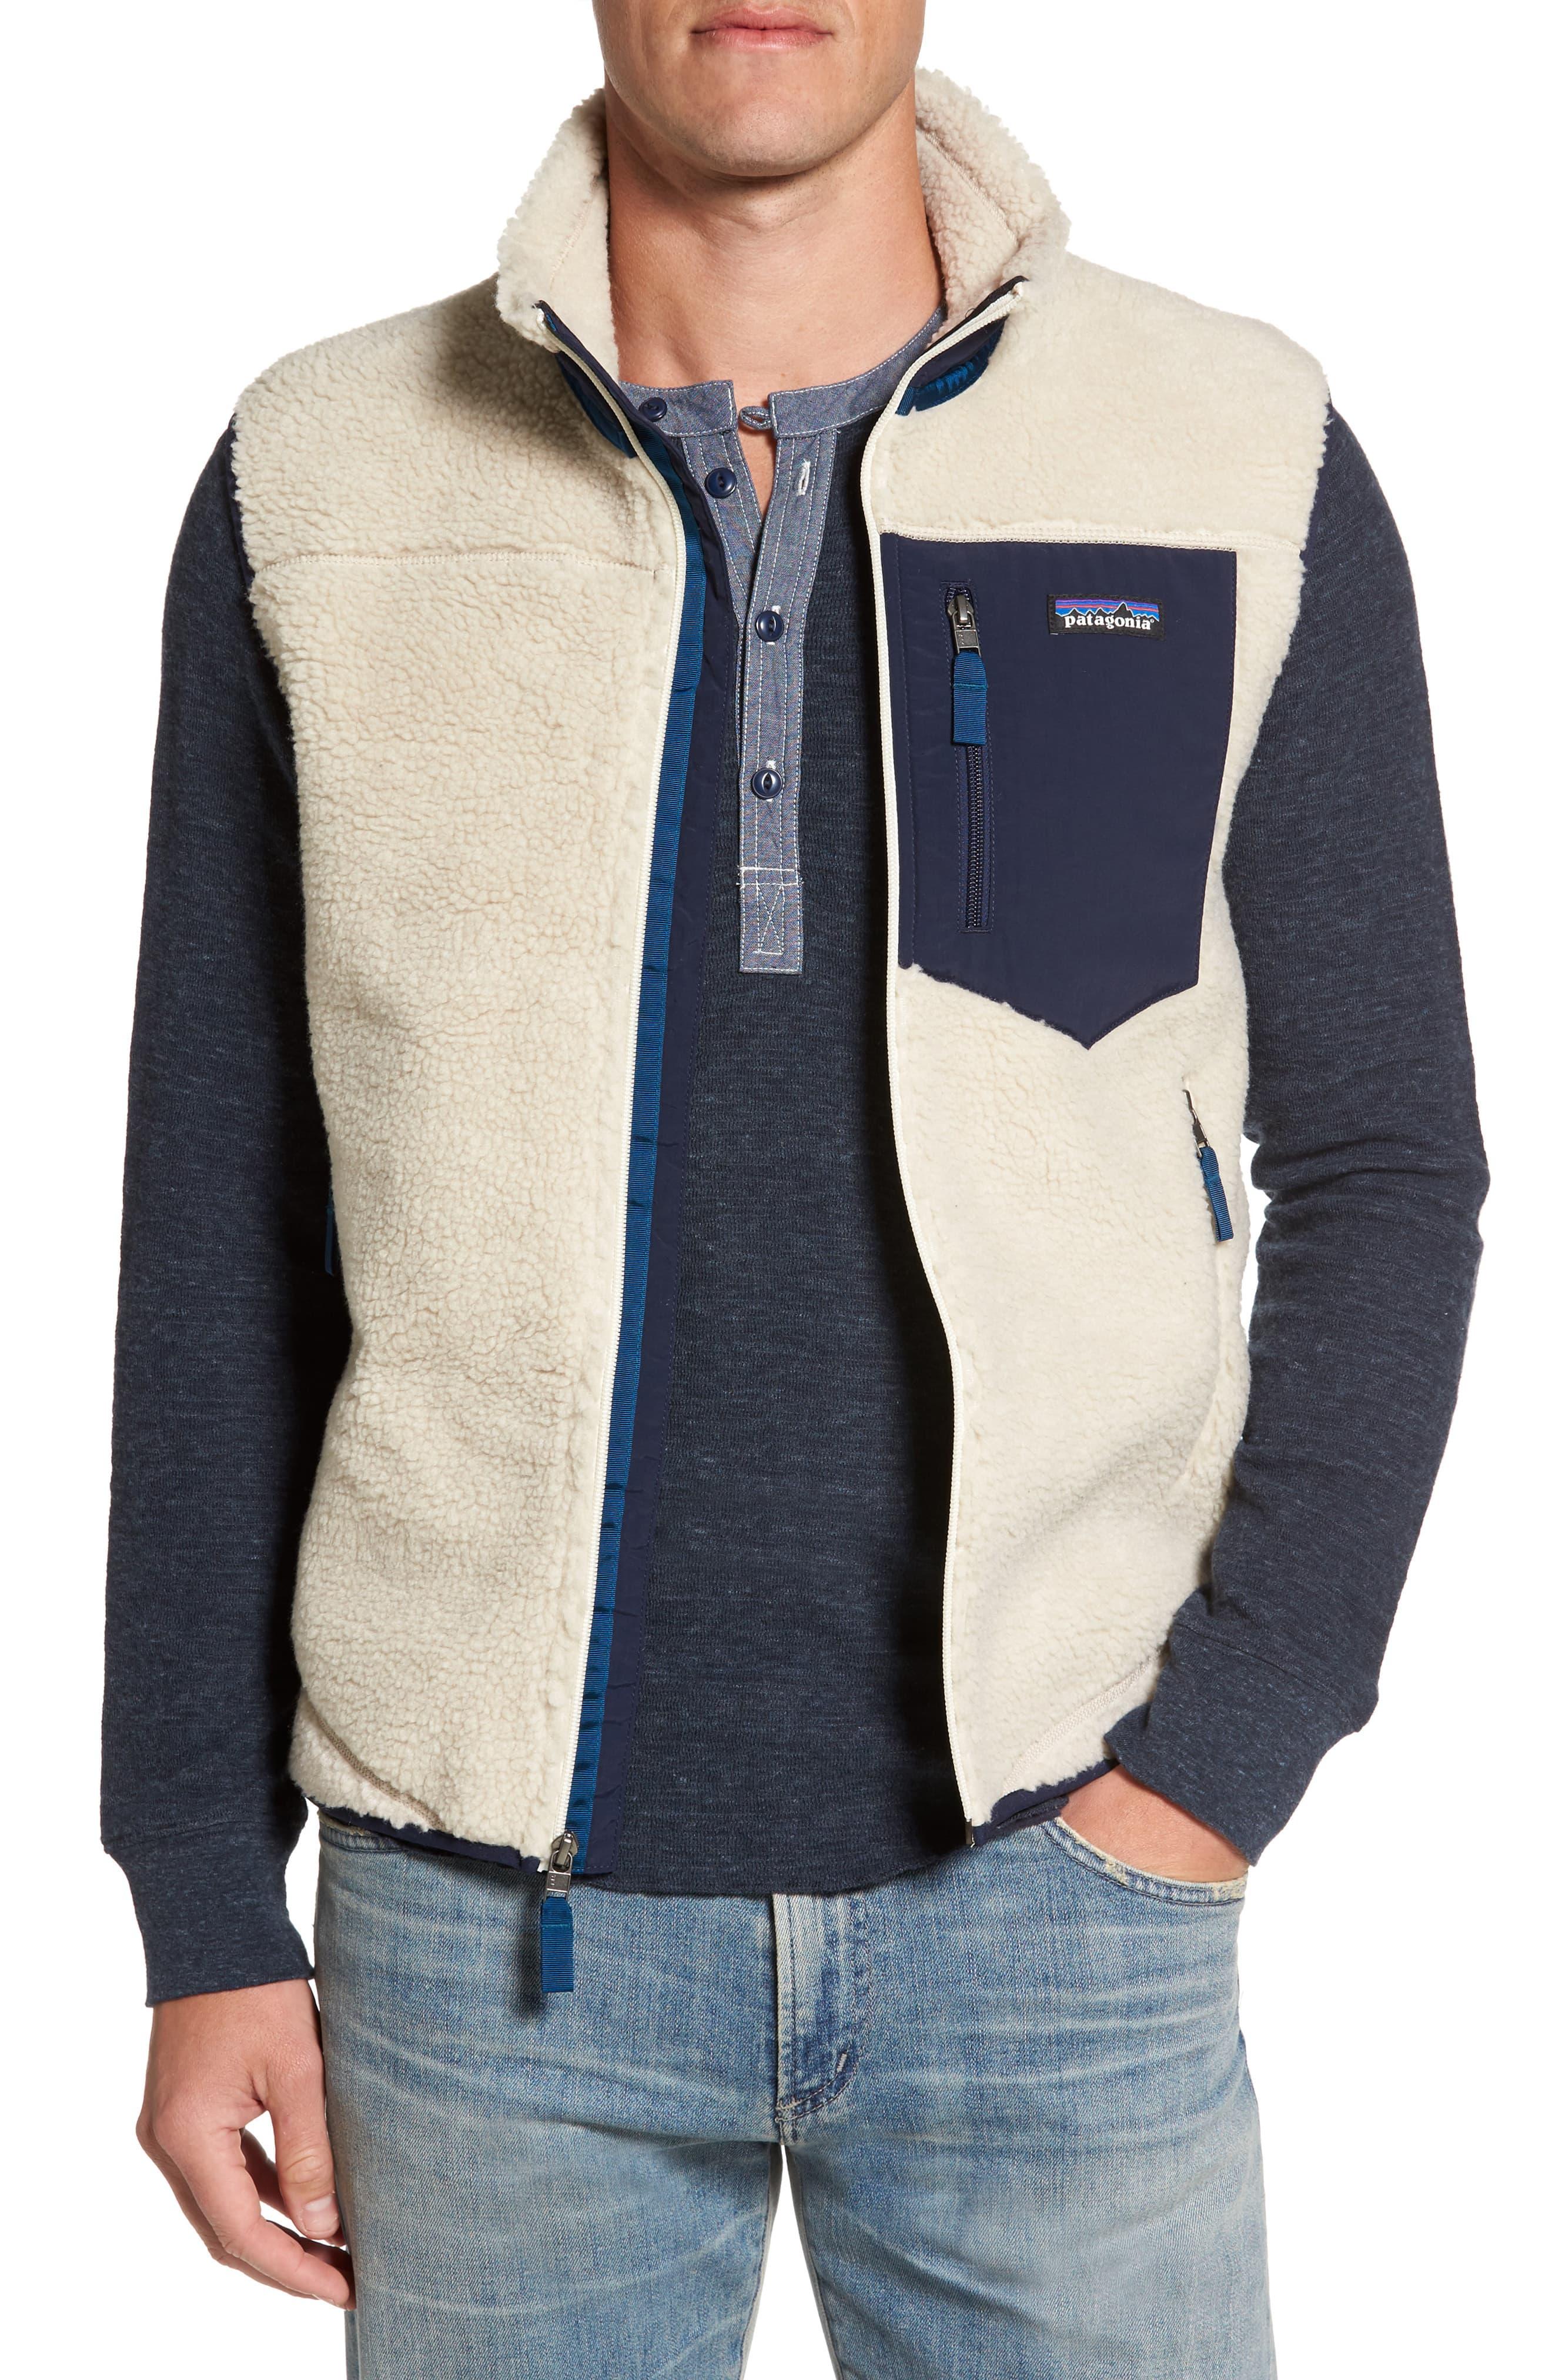 Patagonia Fleece Classic Retro-x Windproof Vest in Beige (Natural) for